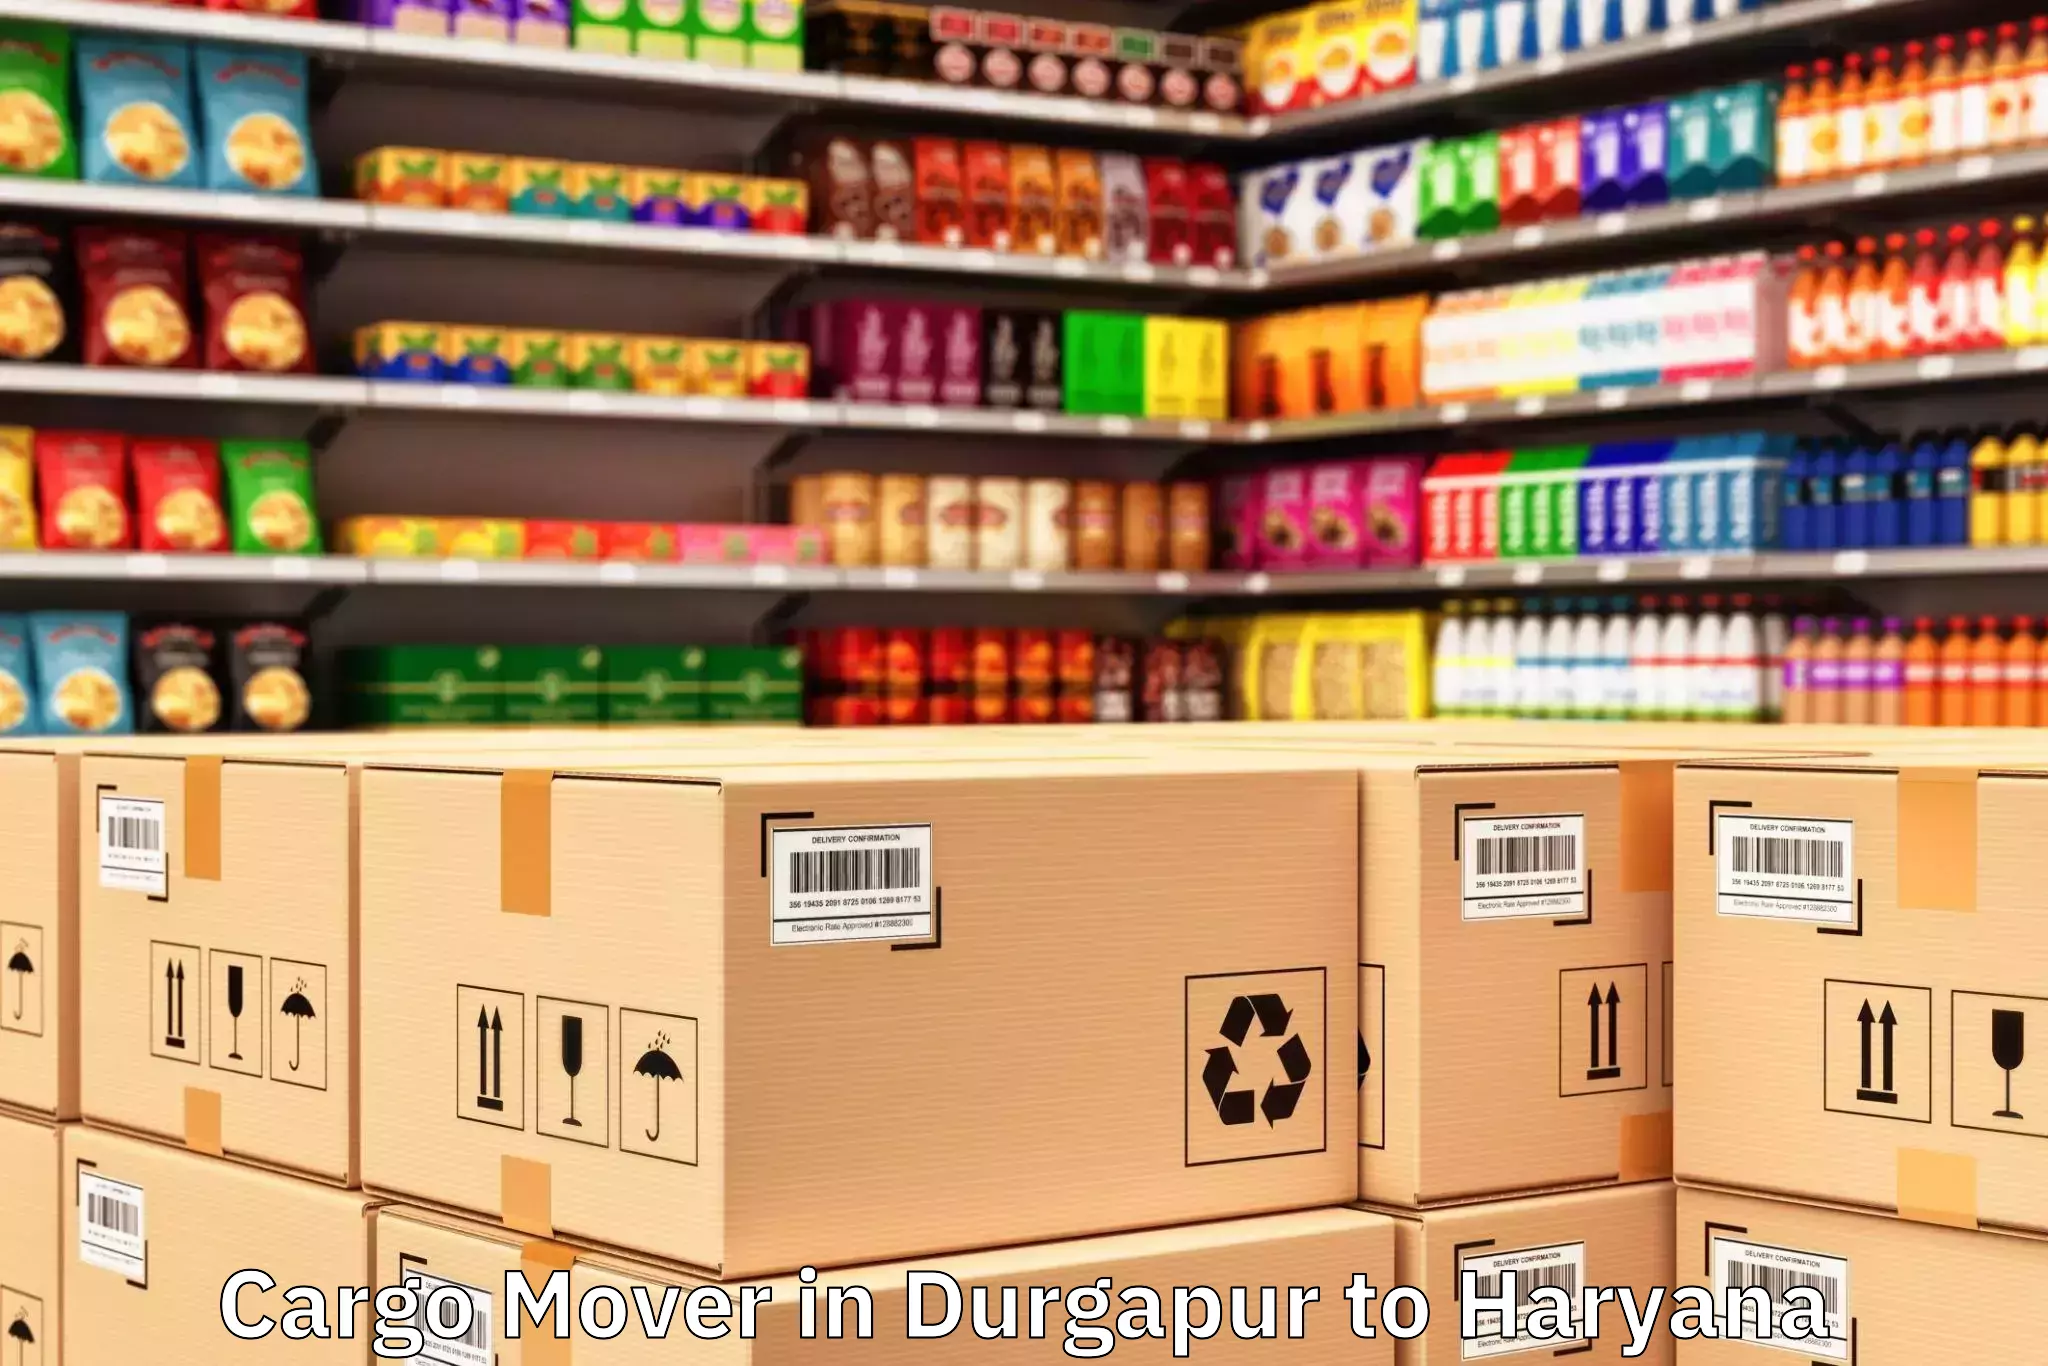 Comprehensive Durgapur to Haryana Cargo Mover